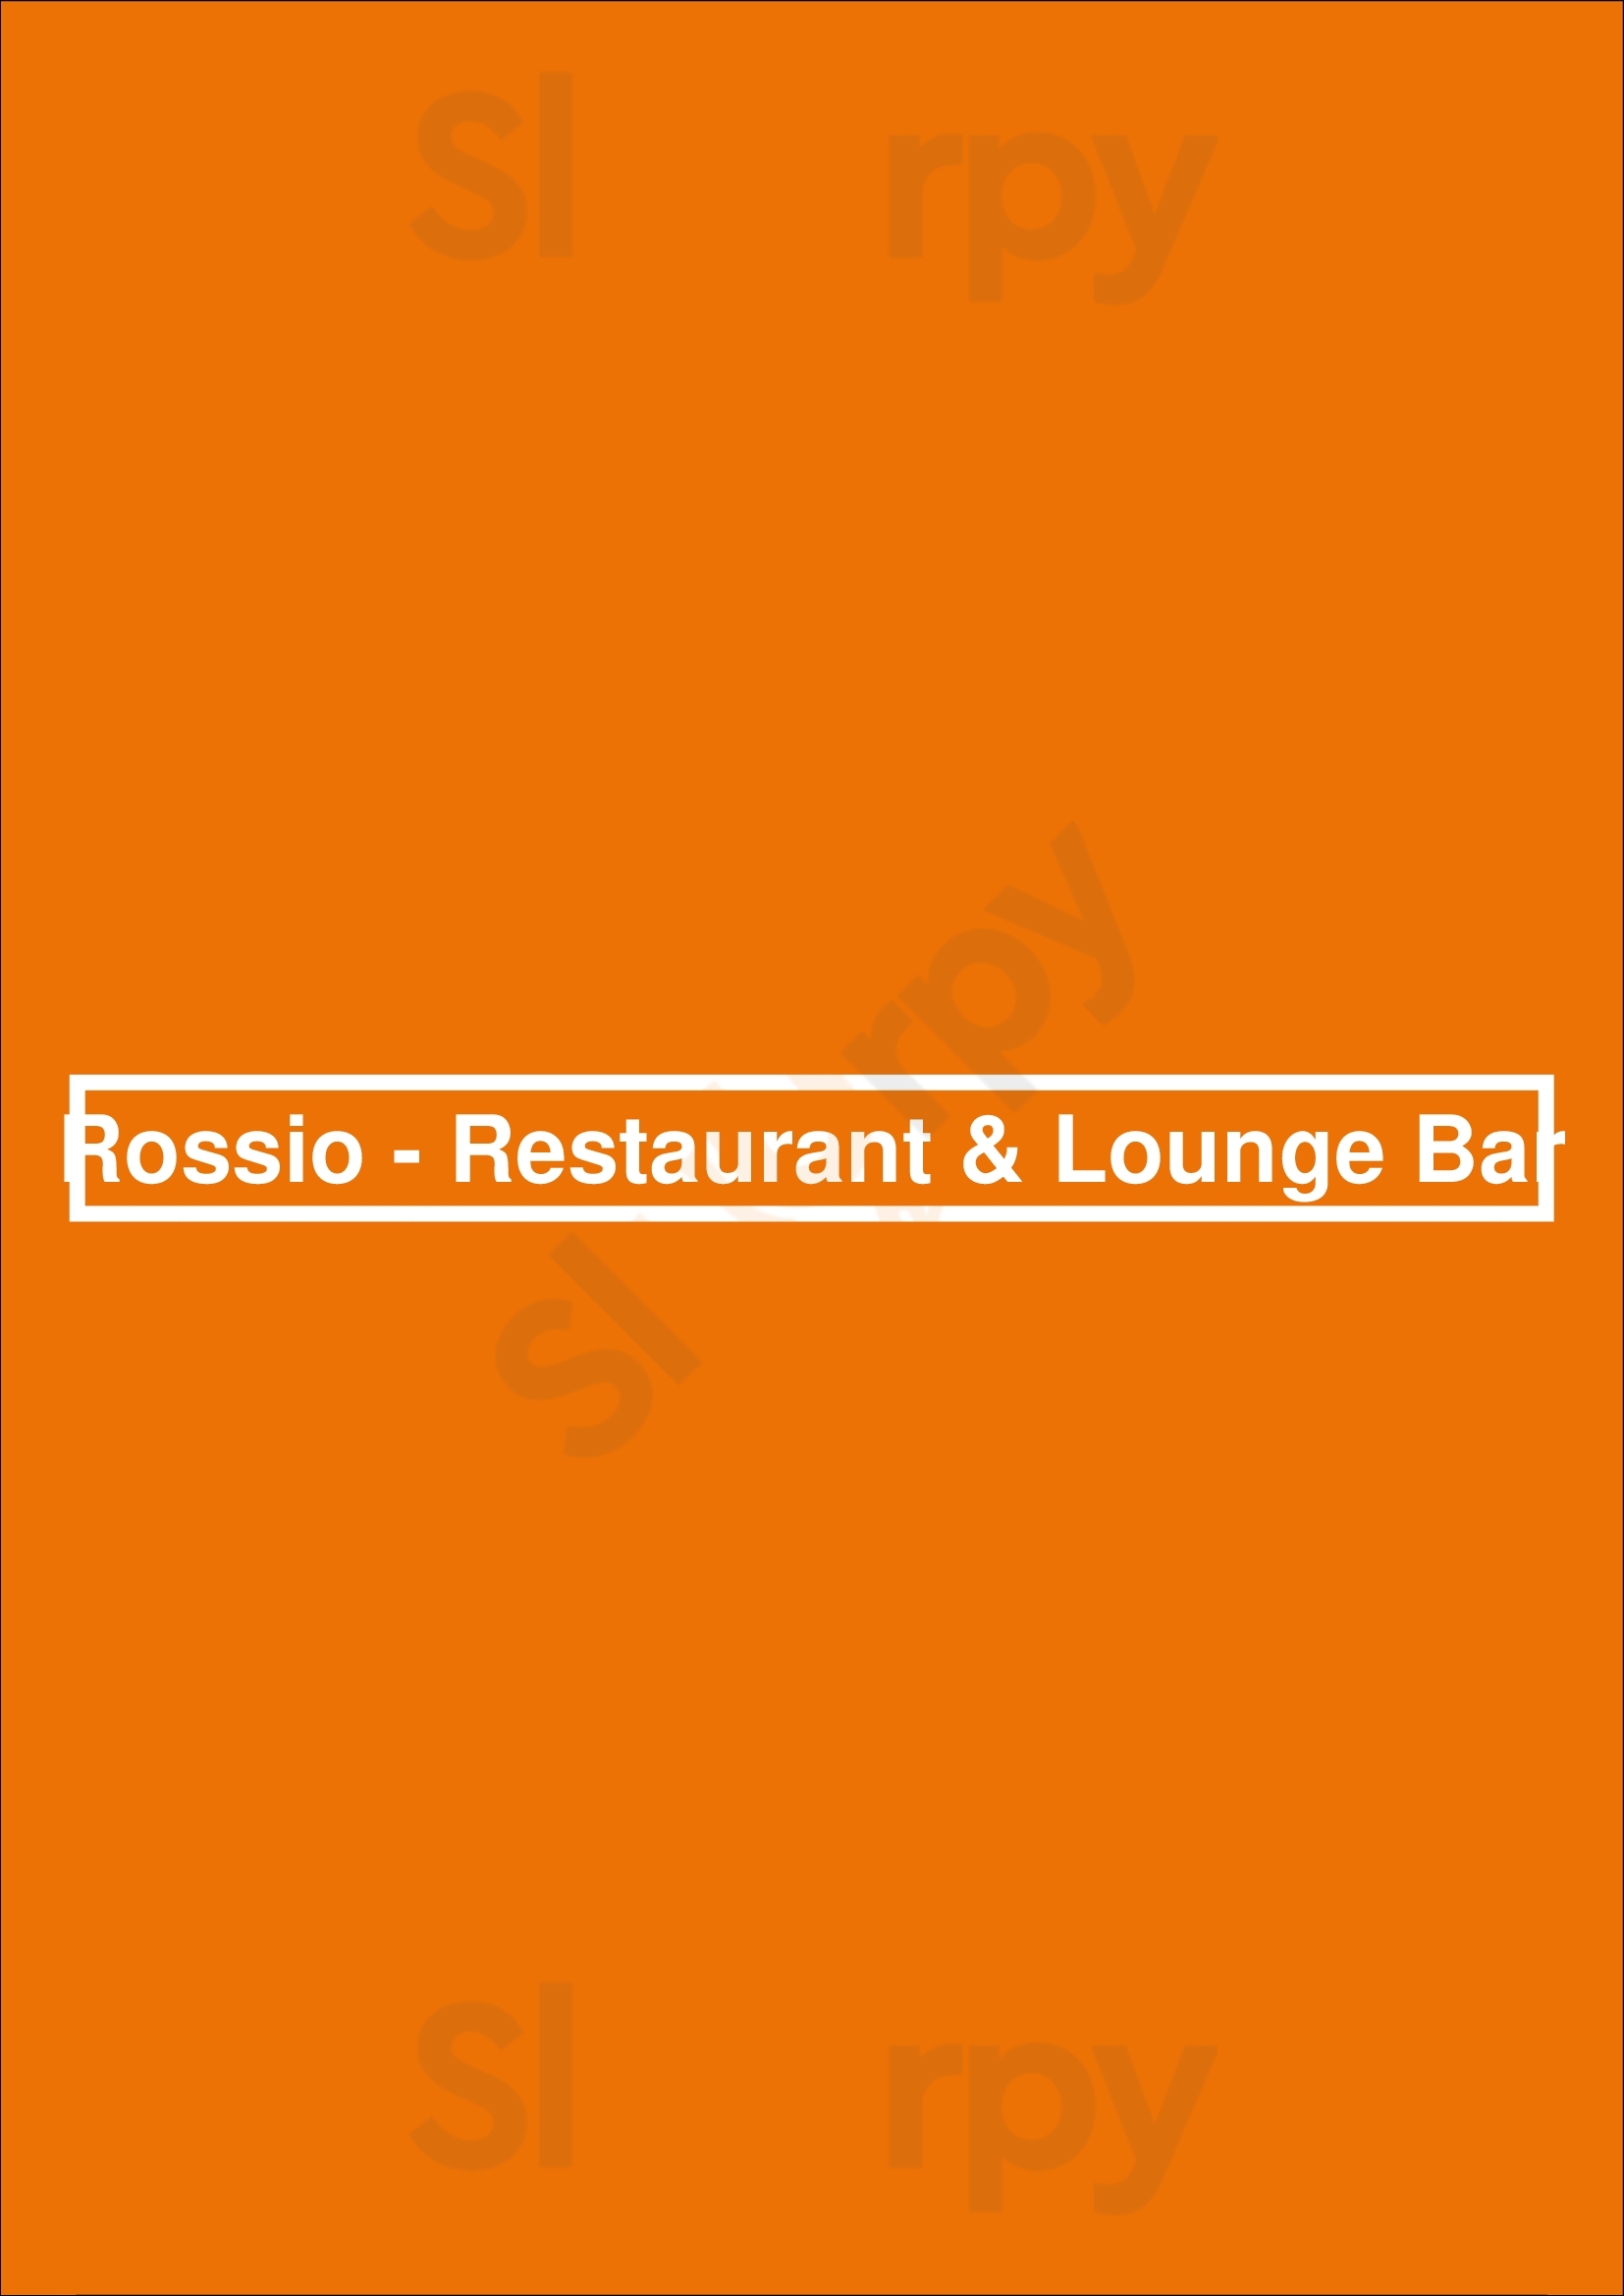 Rossio - Restaurant & Lounge Bar Santa Maria da Feira Menu - 1